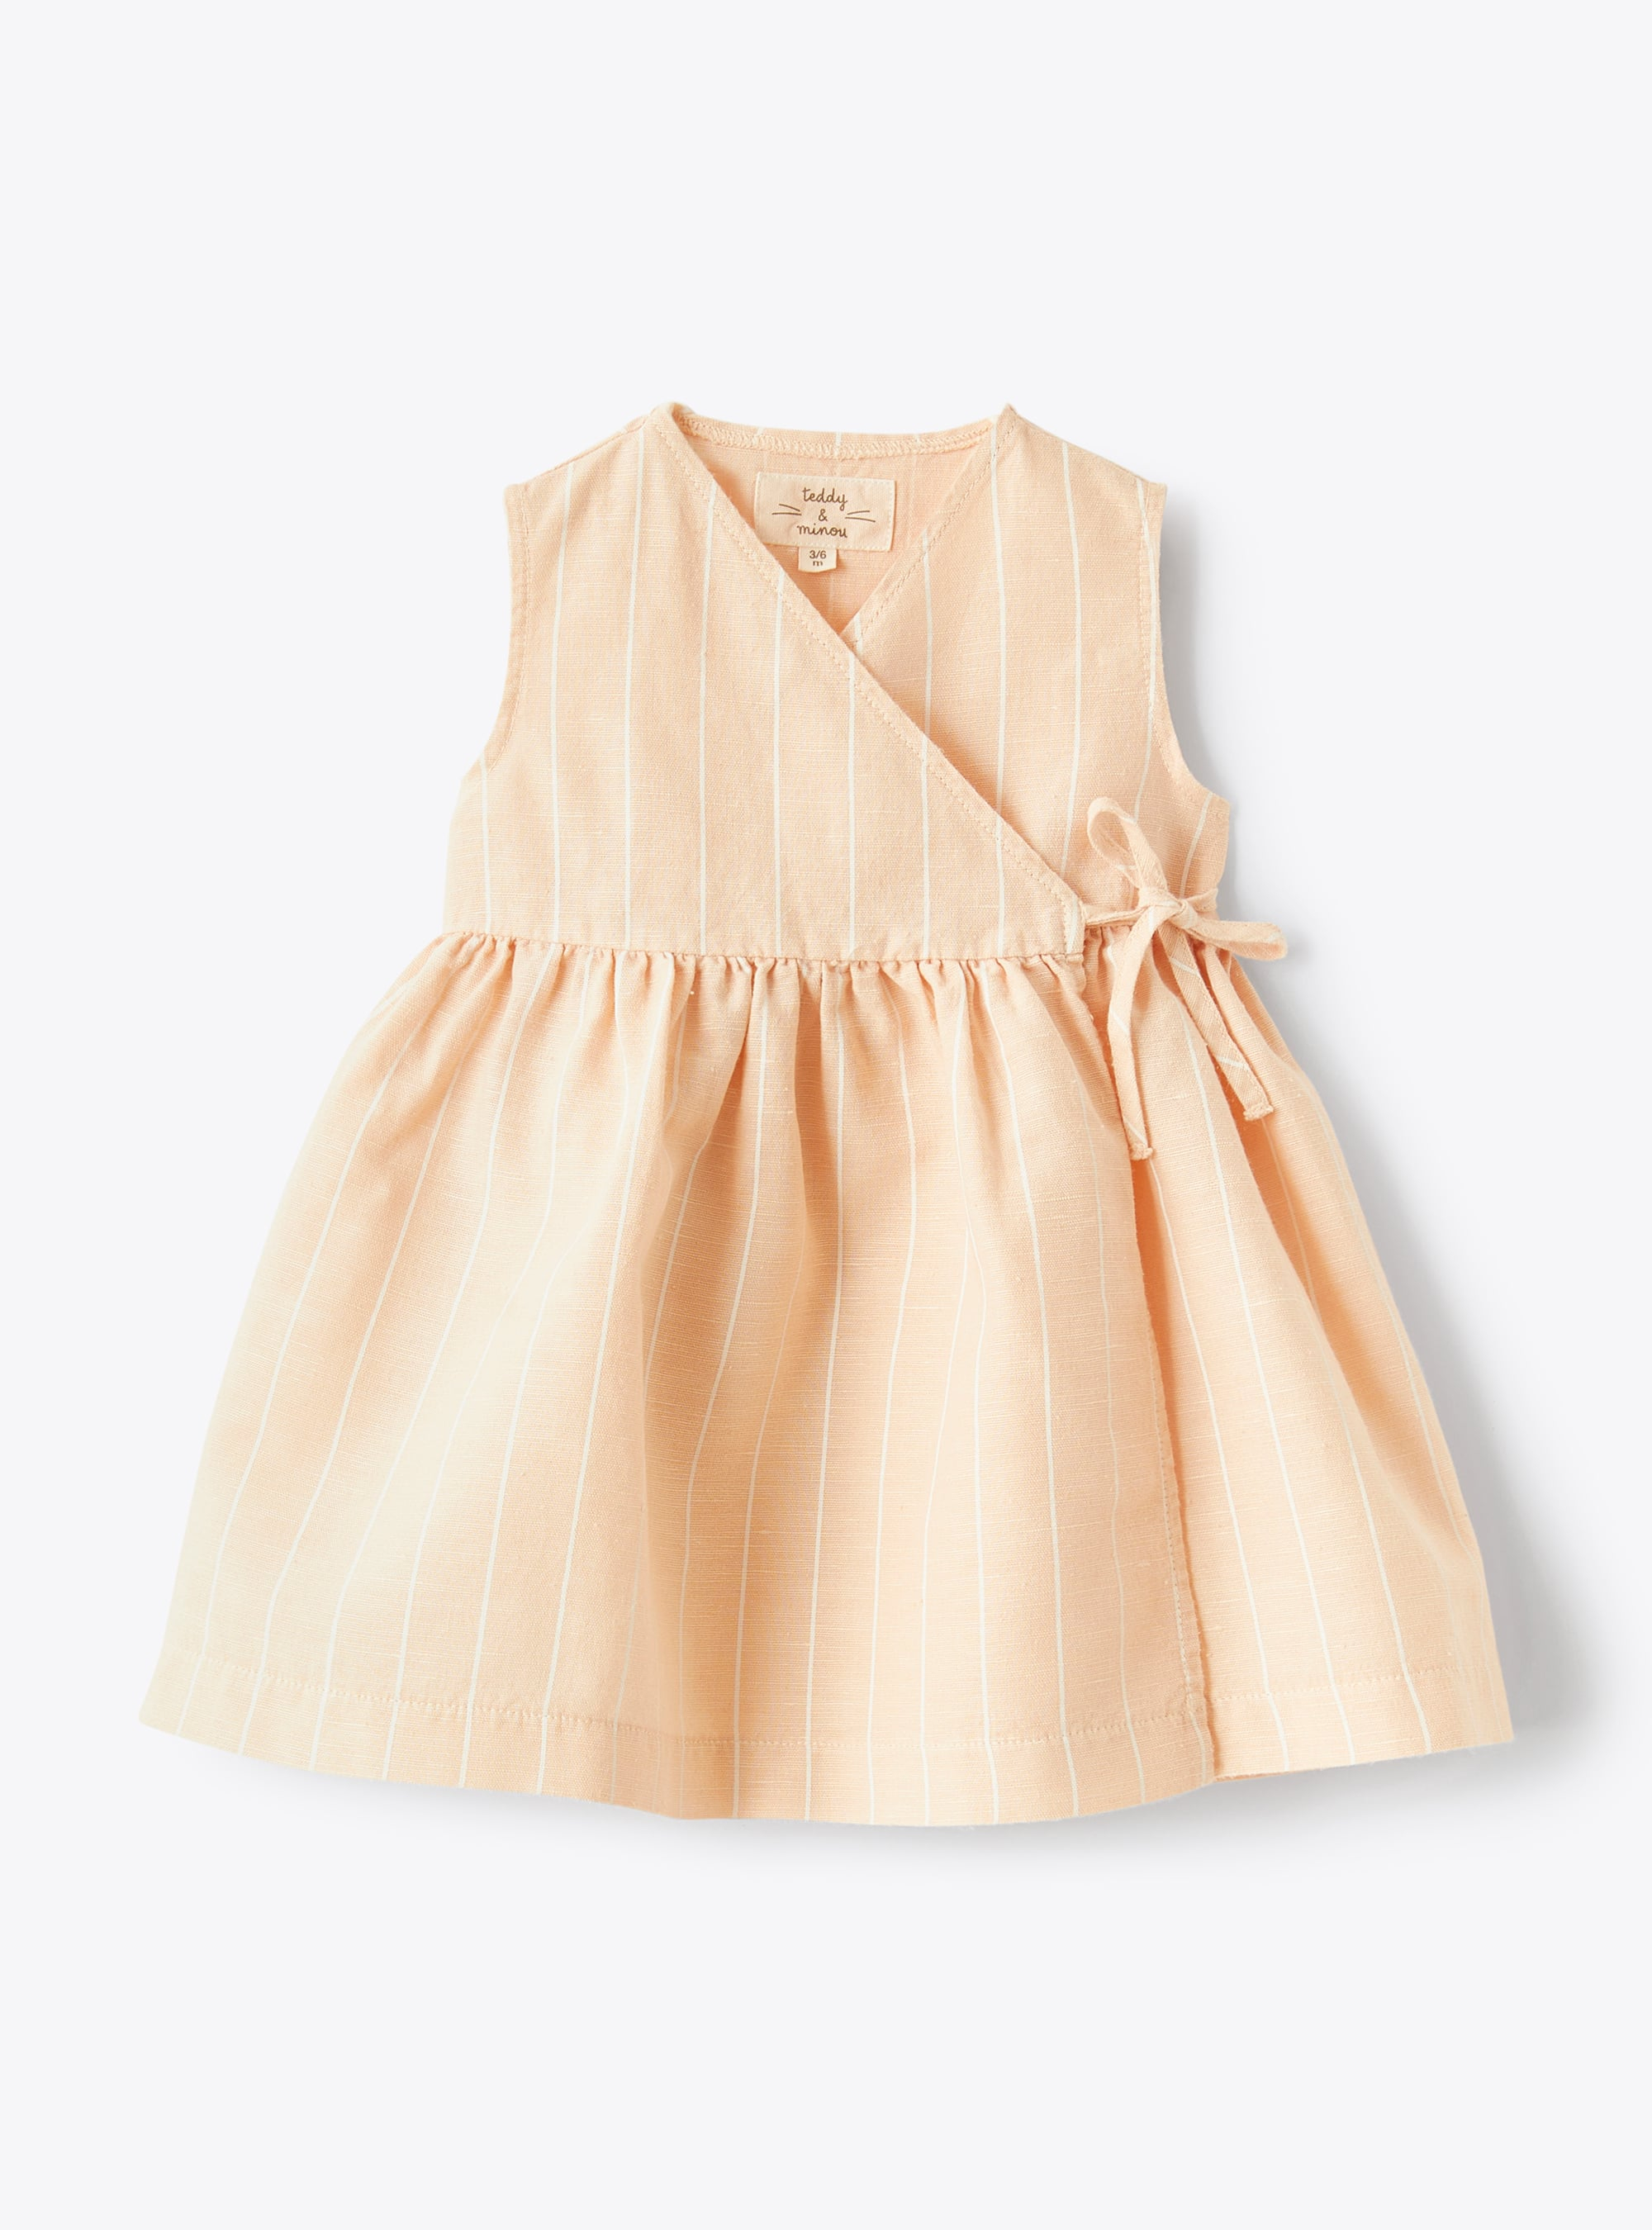 Pinstriped dress in a linen blend - Dresses - Il Gufo